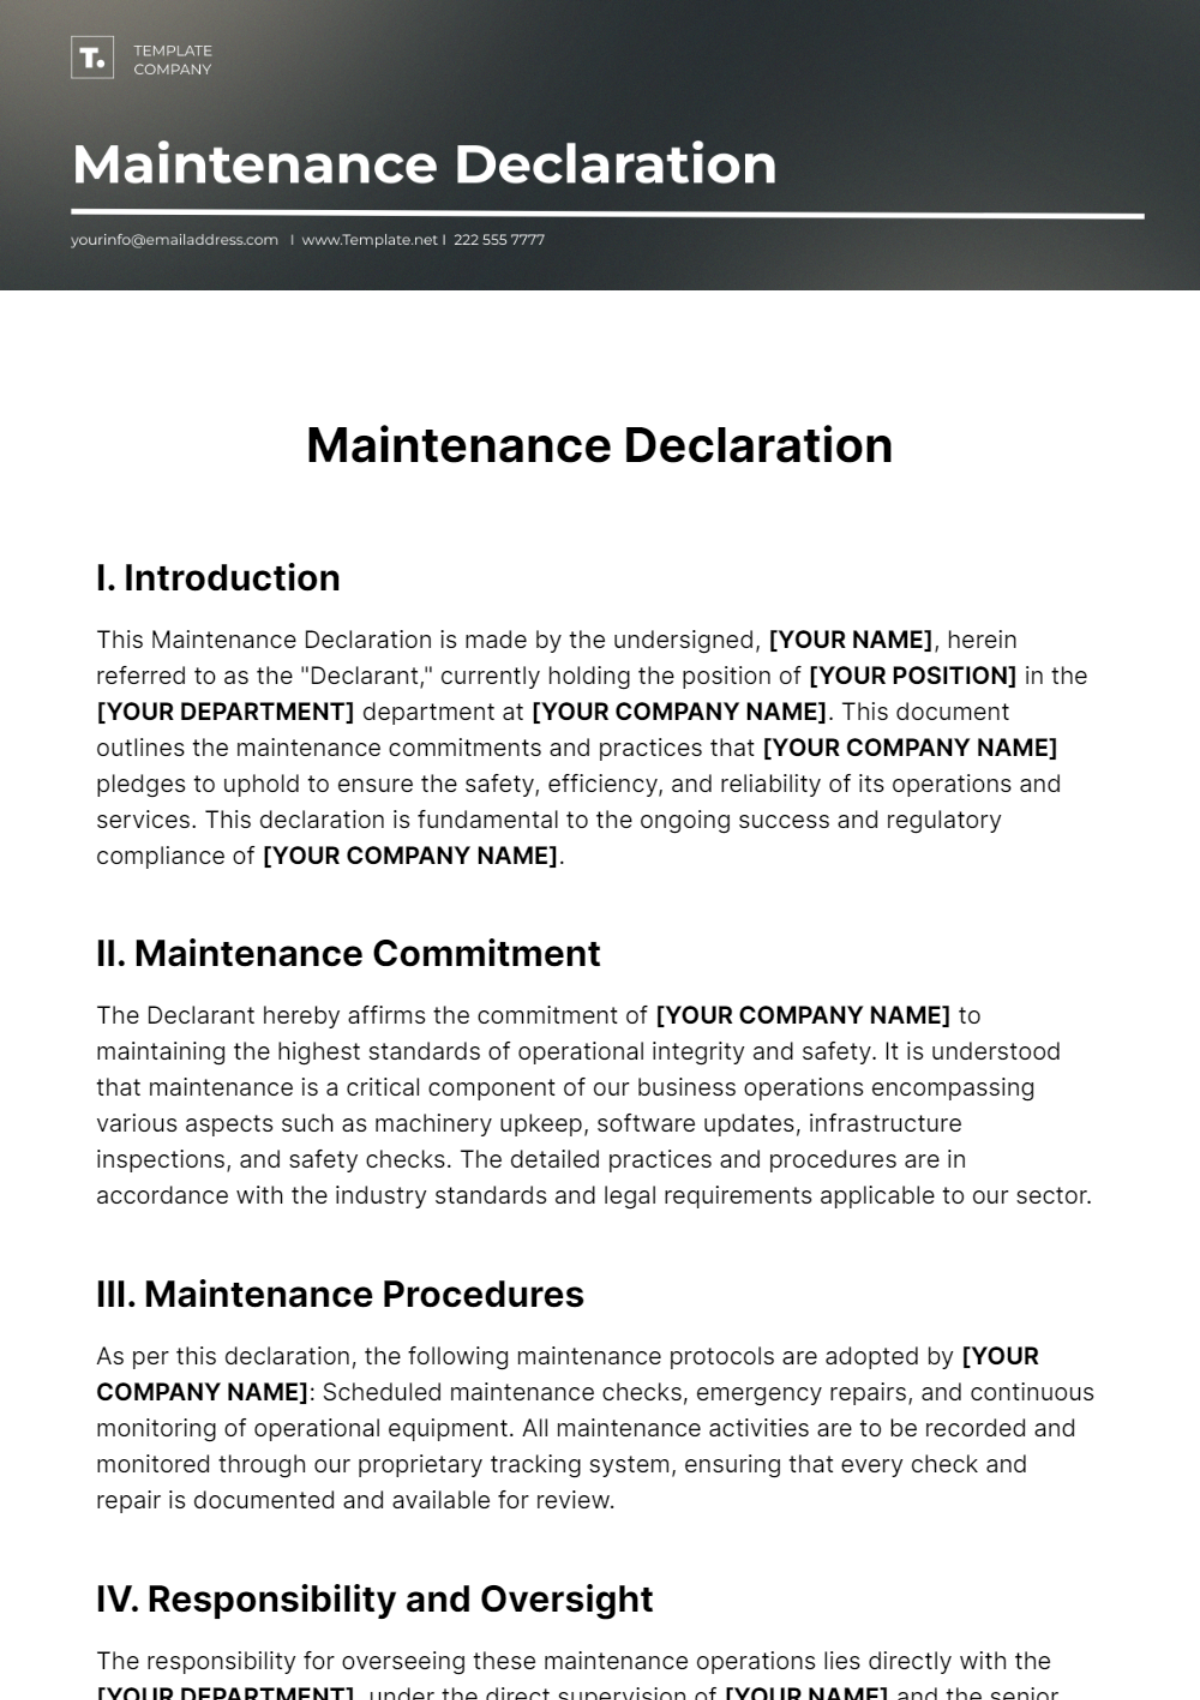 Free Maintenance Declaration Template